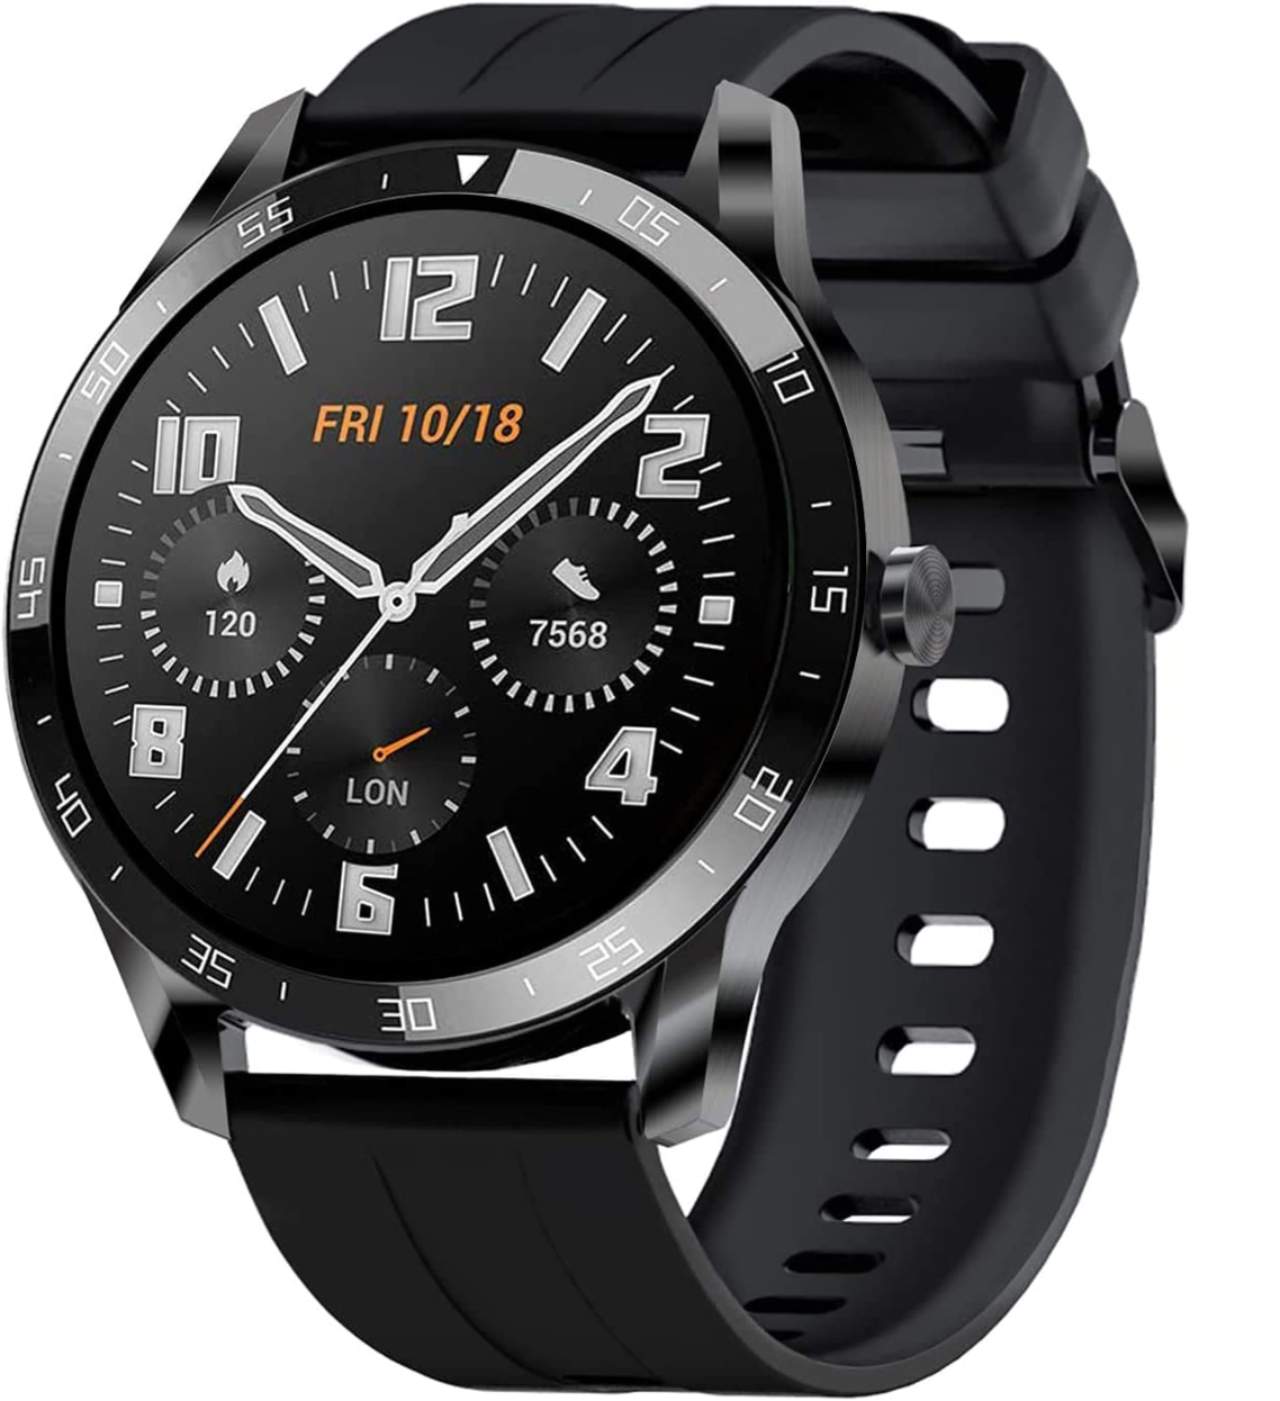 Lo smartwatch economico Blackview X1